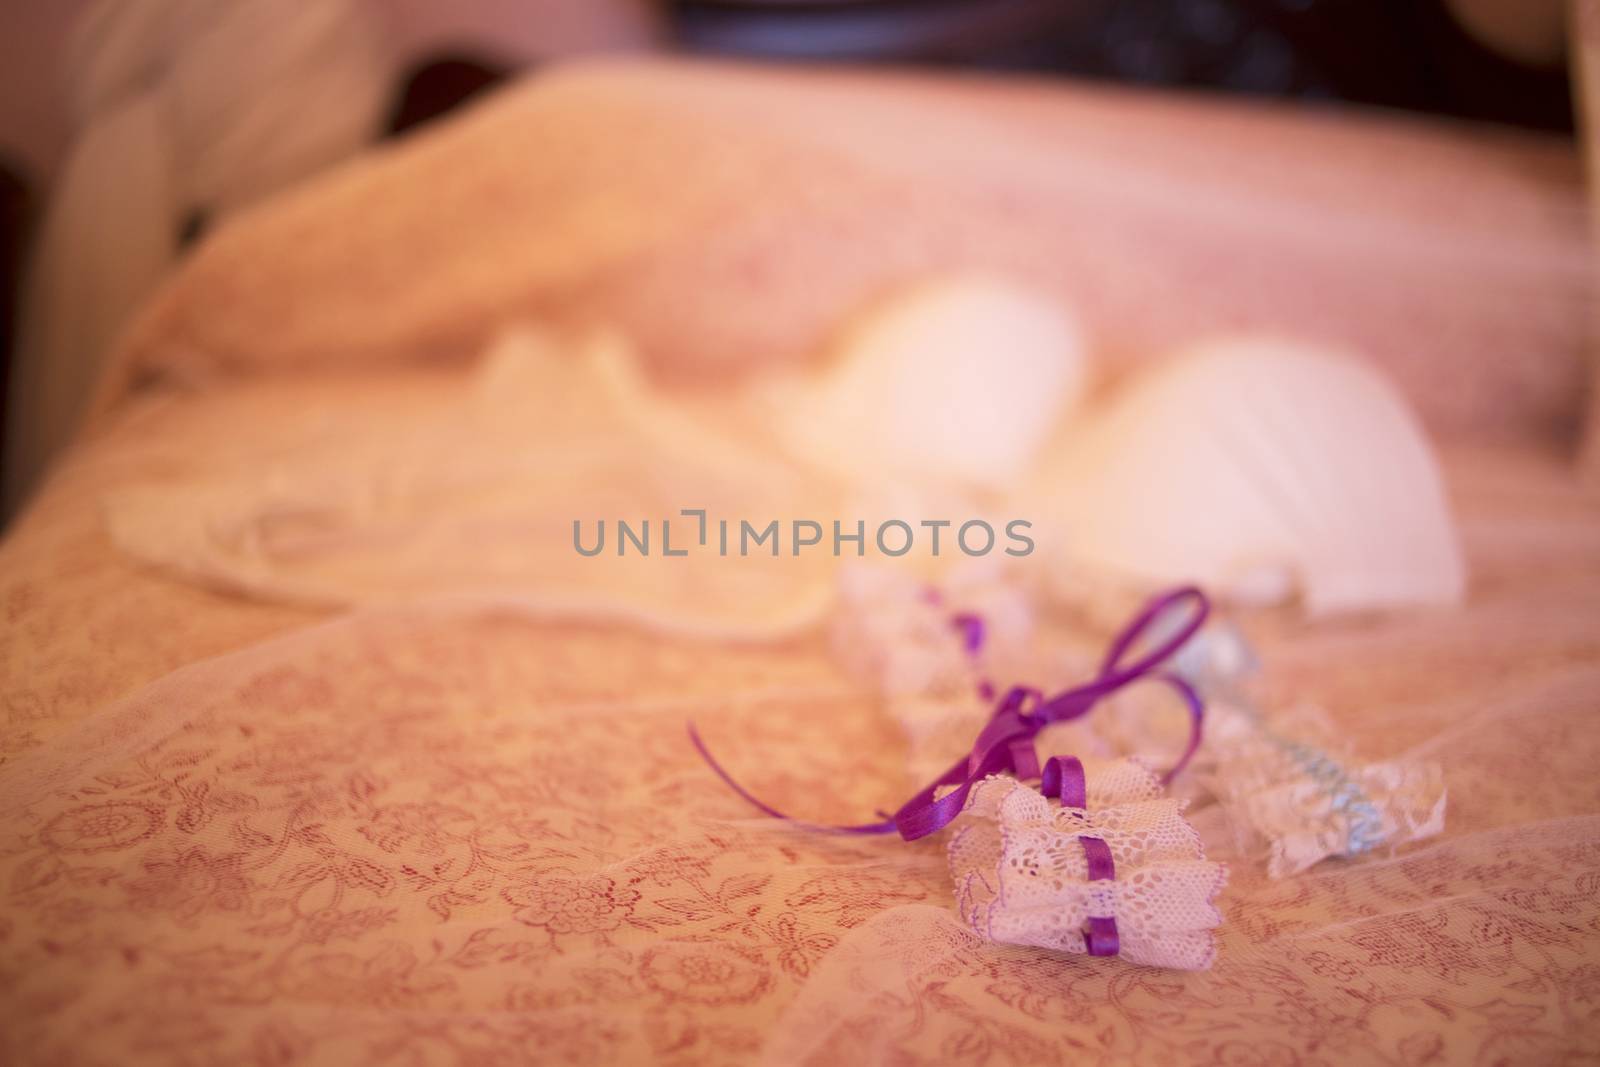 Color artistic digital rectangular horizontal photo of the bride's wedding bridal garter belt and bra underwear lingerie on bed. Shallow depth of focus with background defocused. 